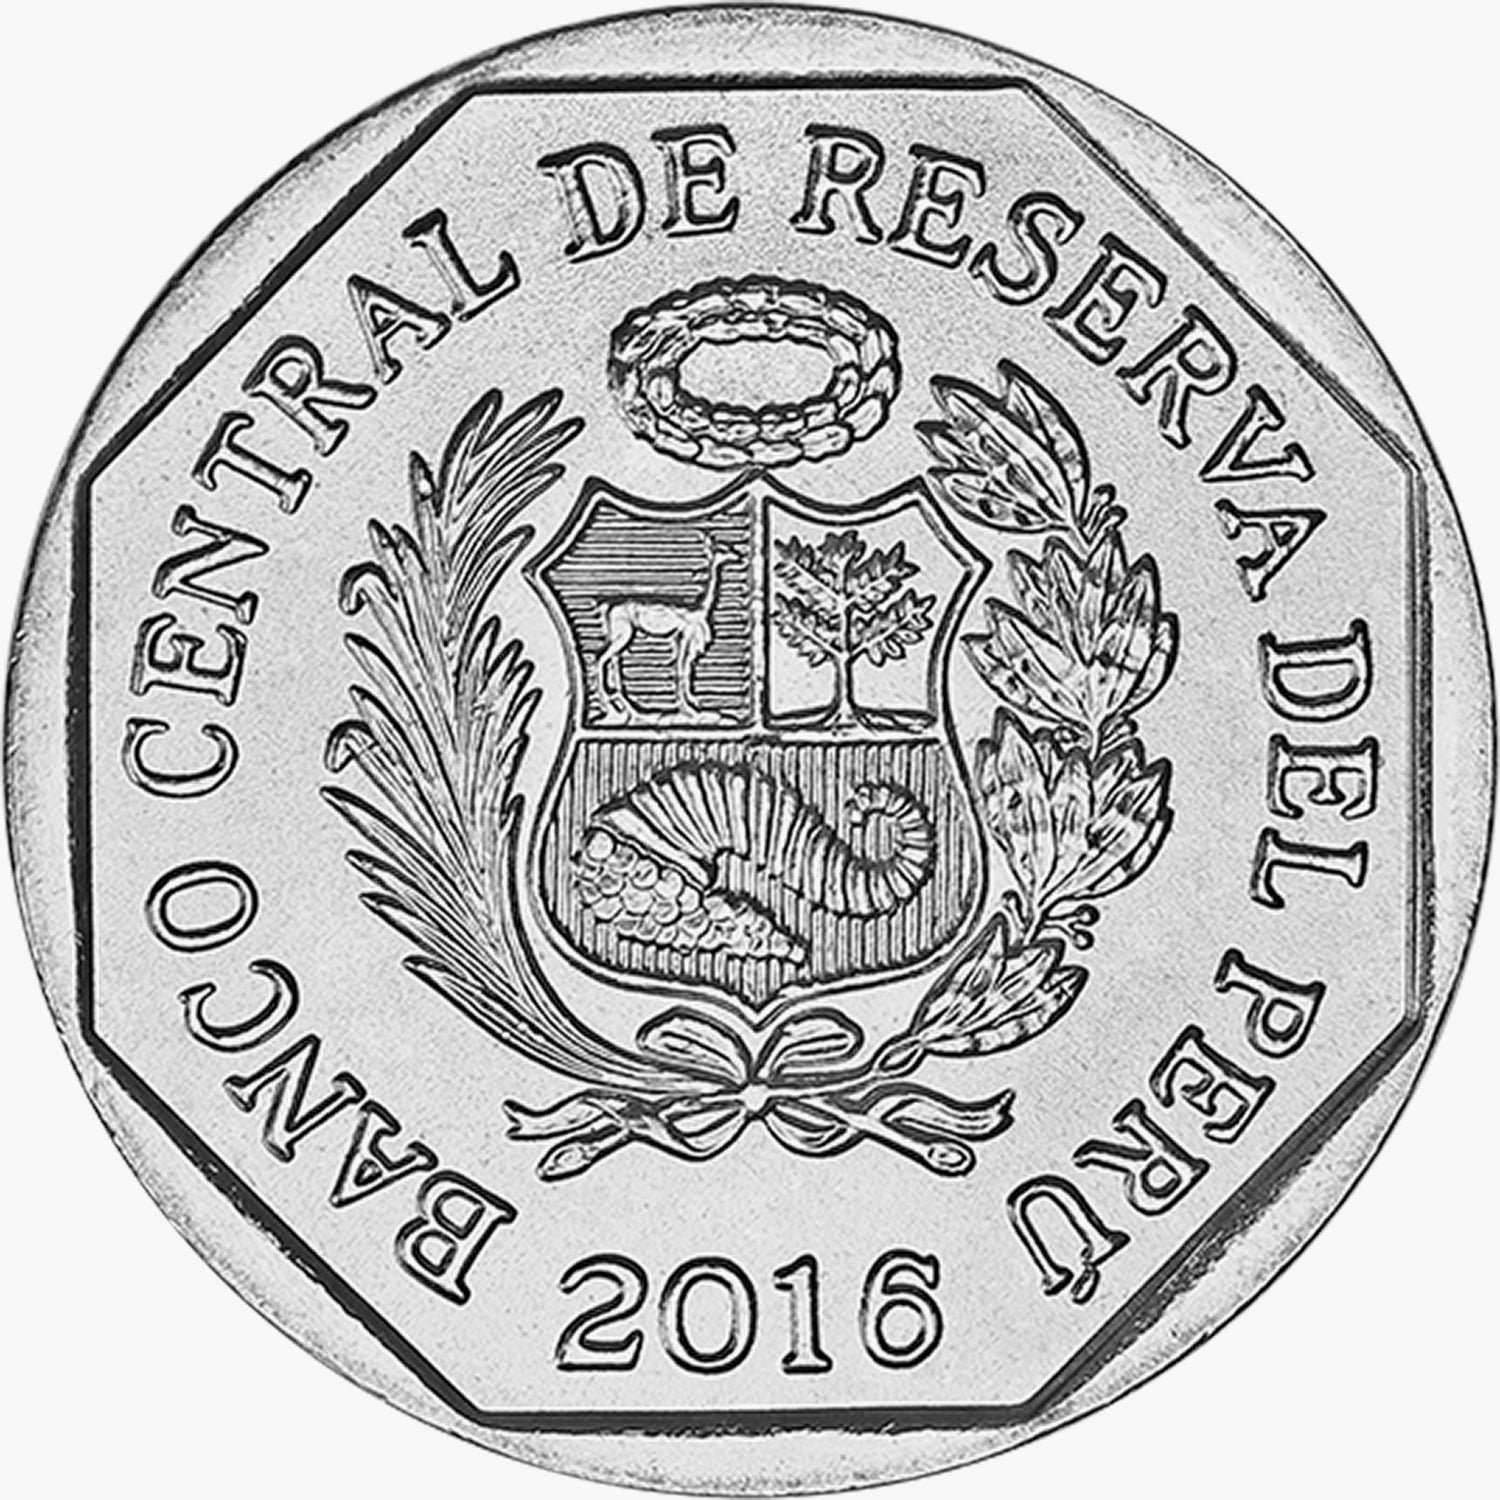 Commemorative Coin Series ‚ÄûWealth and Pride of Peru‚Äù